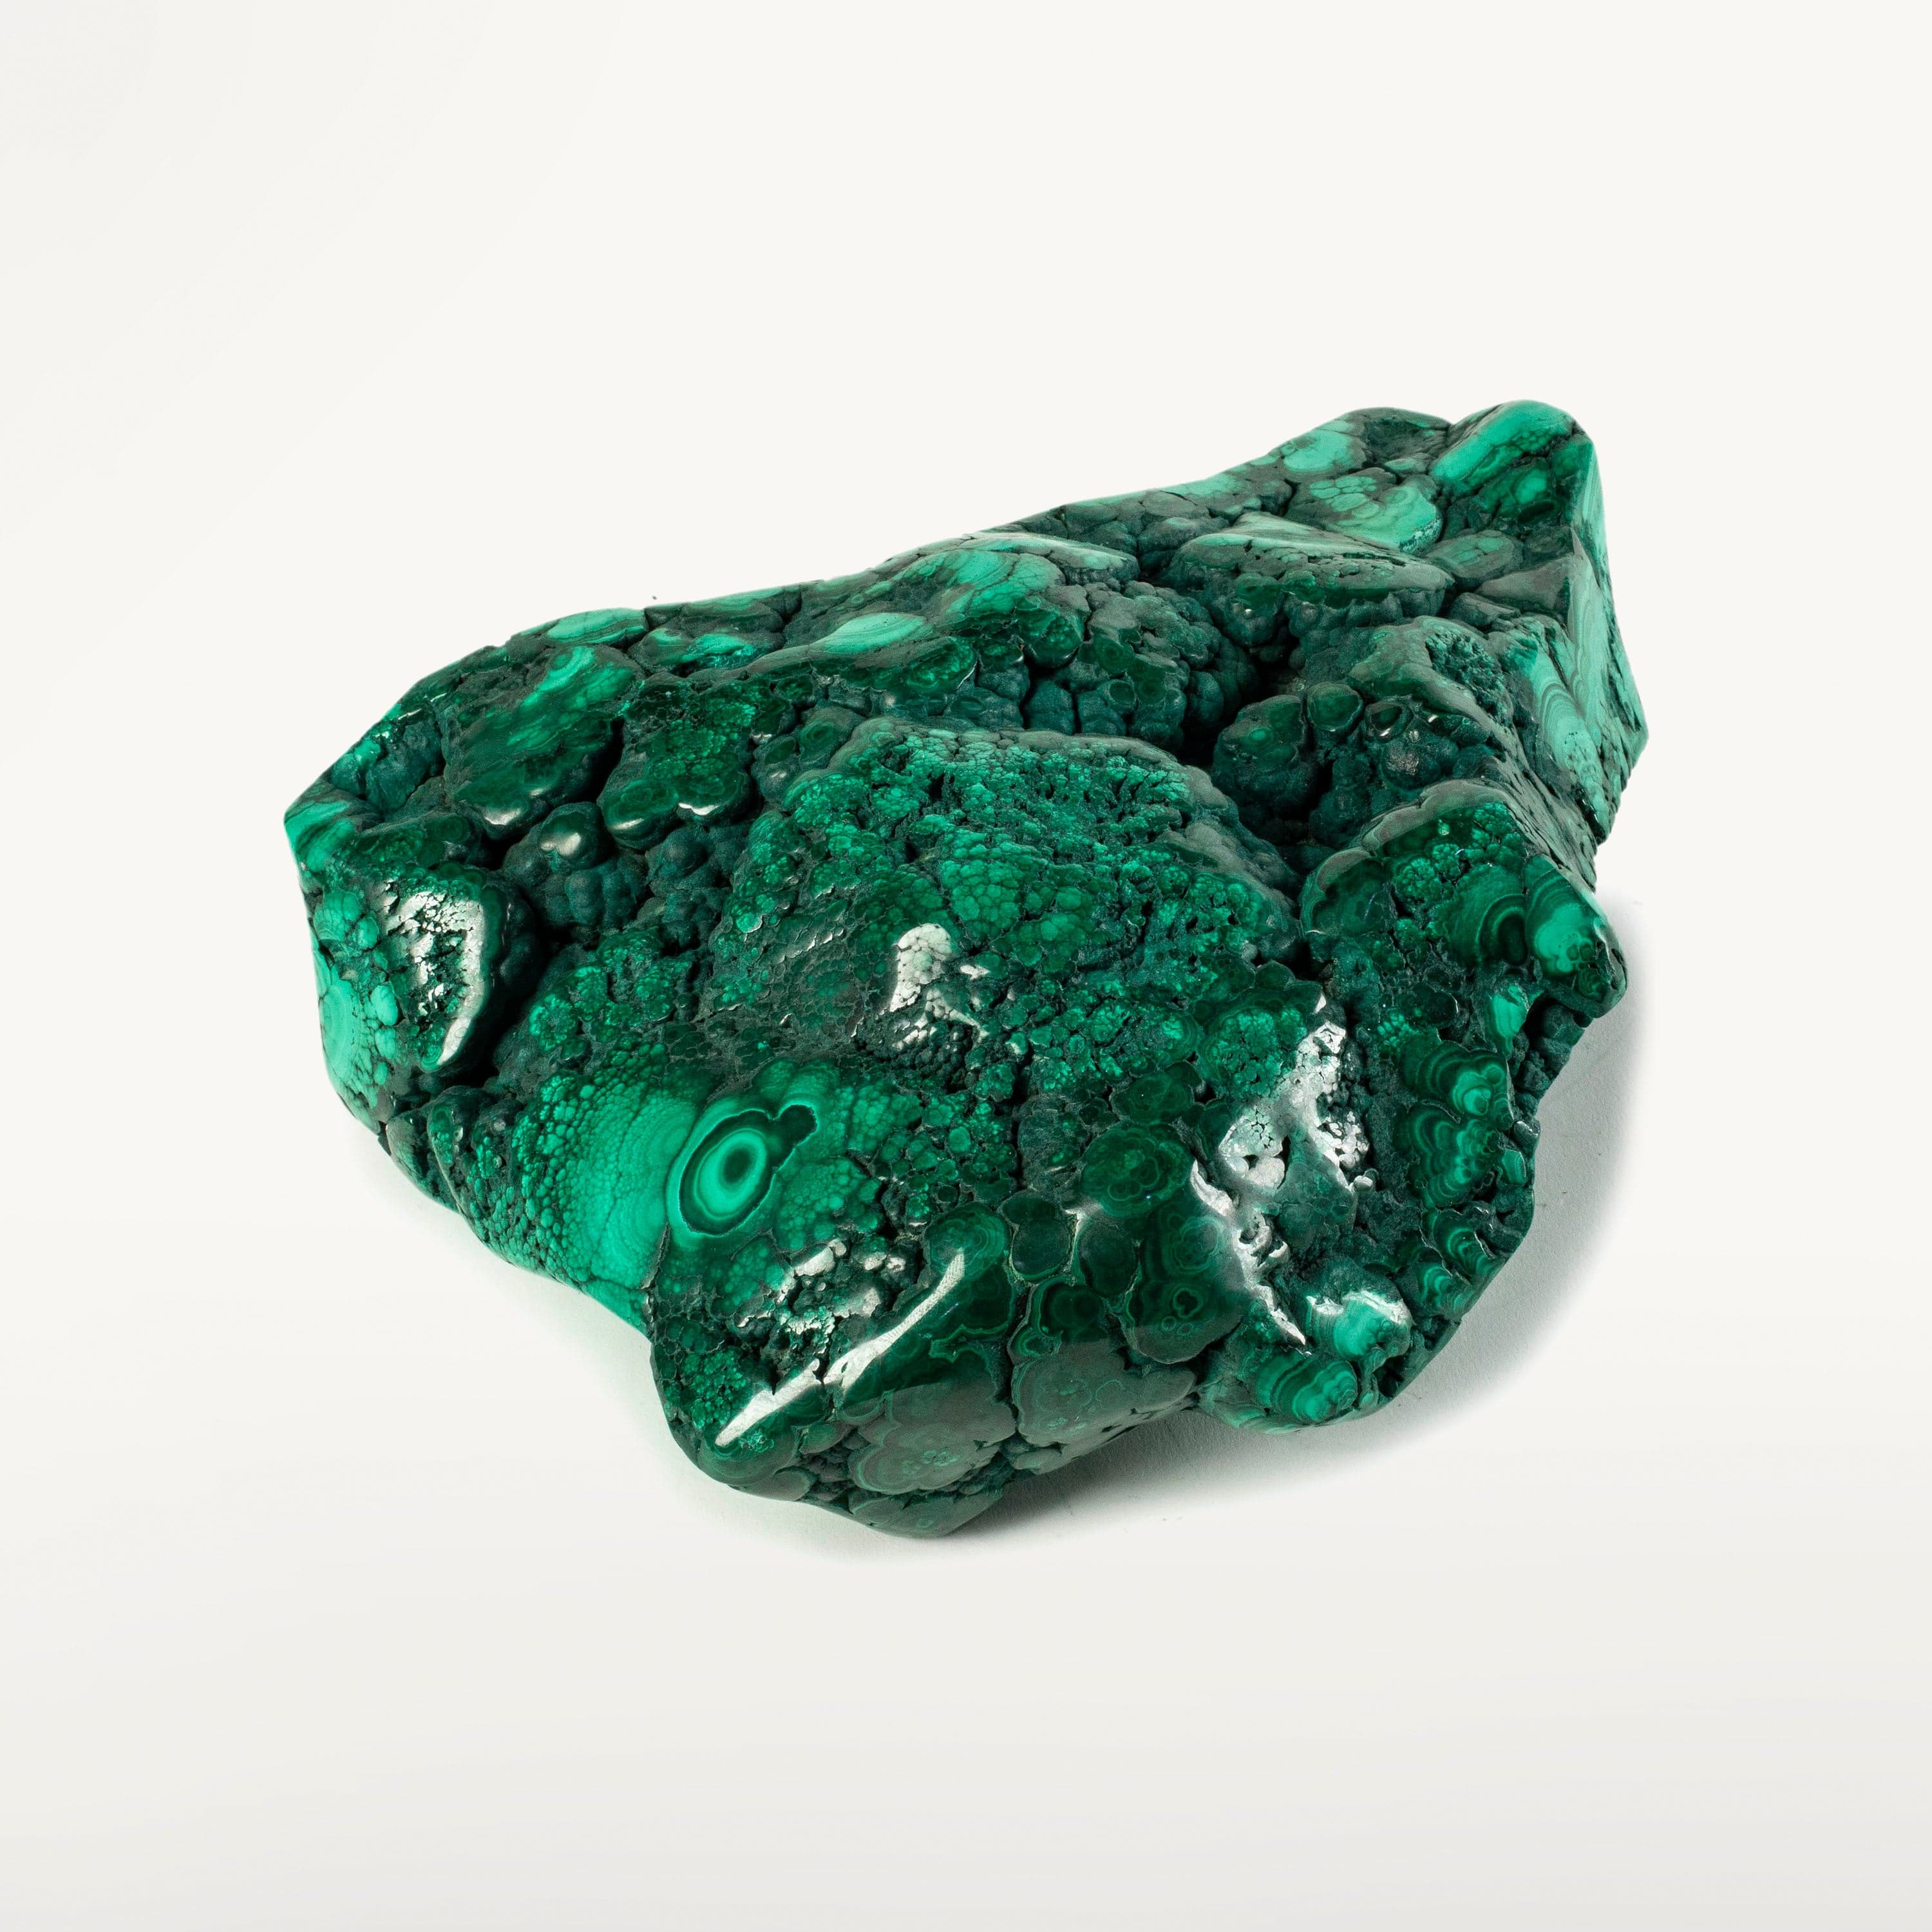 Kalifano Malachite Rare Natural Green Malachite Polished Freeform Specimen from Congo - 5.6 kg / 12.2 lbs MA3500.001